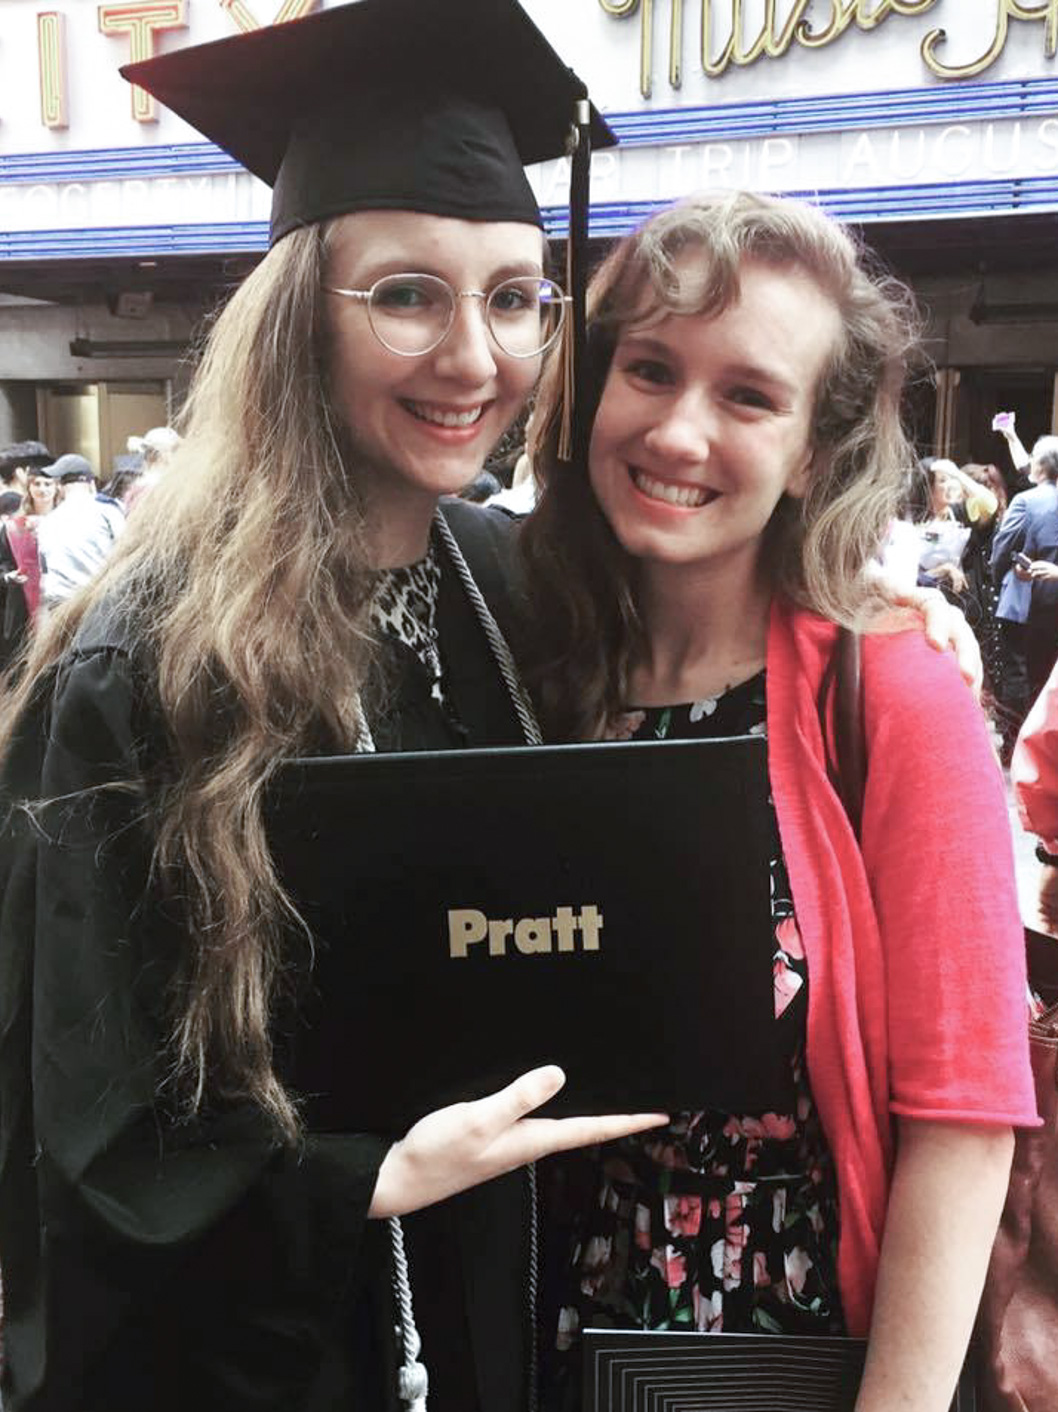 Leigh Emig, an Upper School English teacher, posing with a friend on graduation day